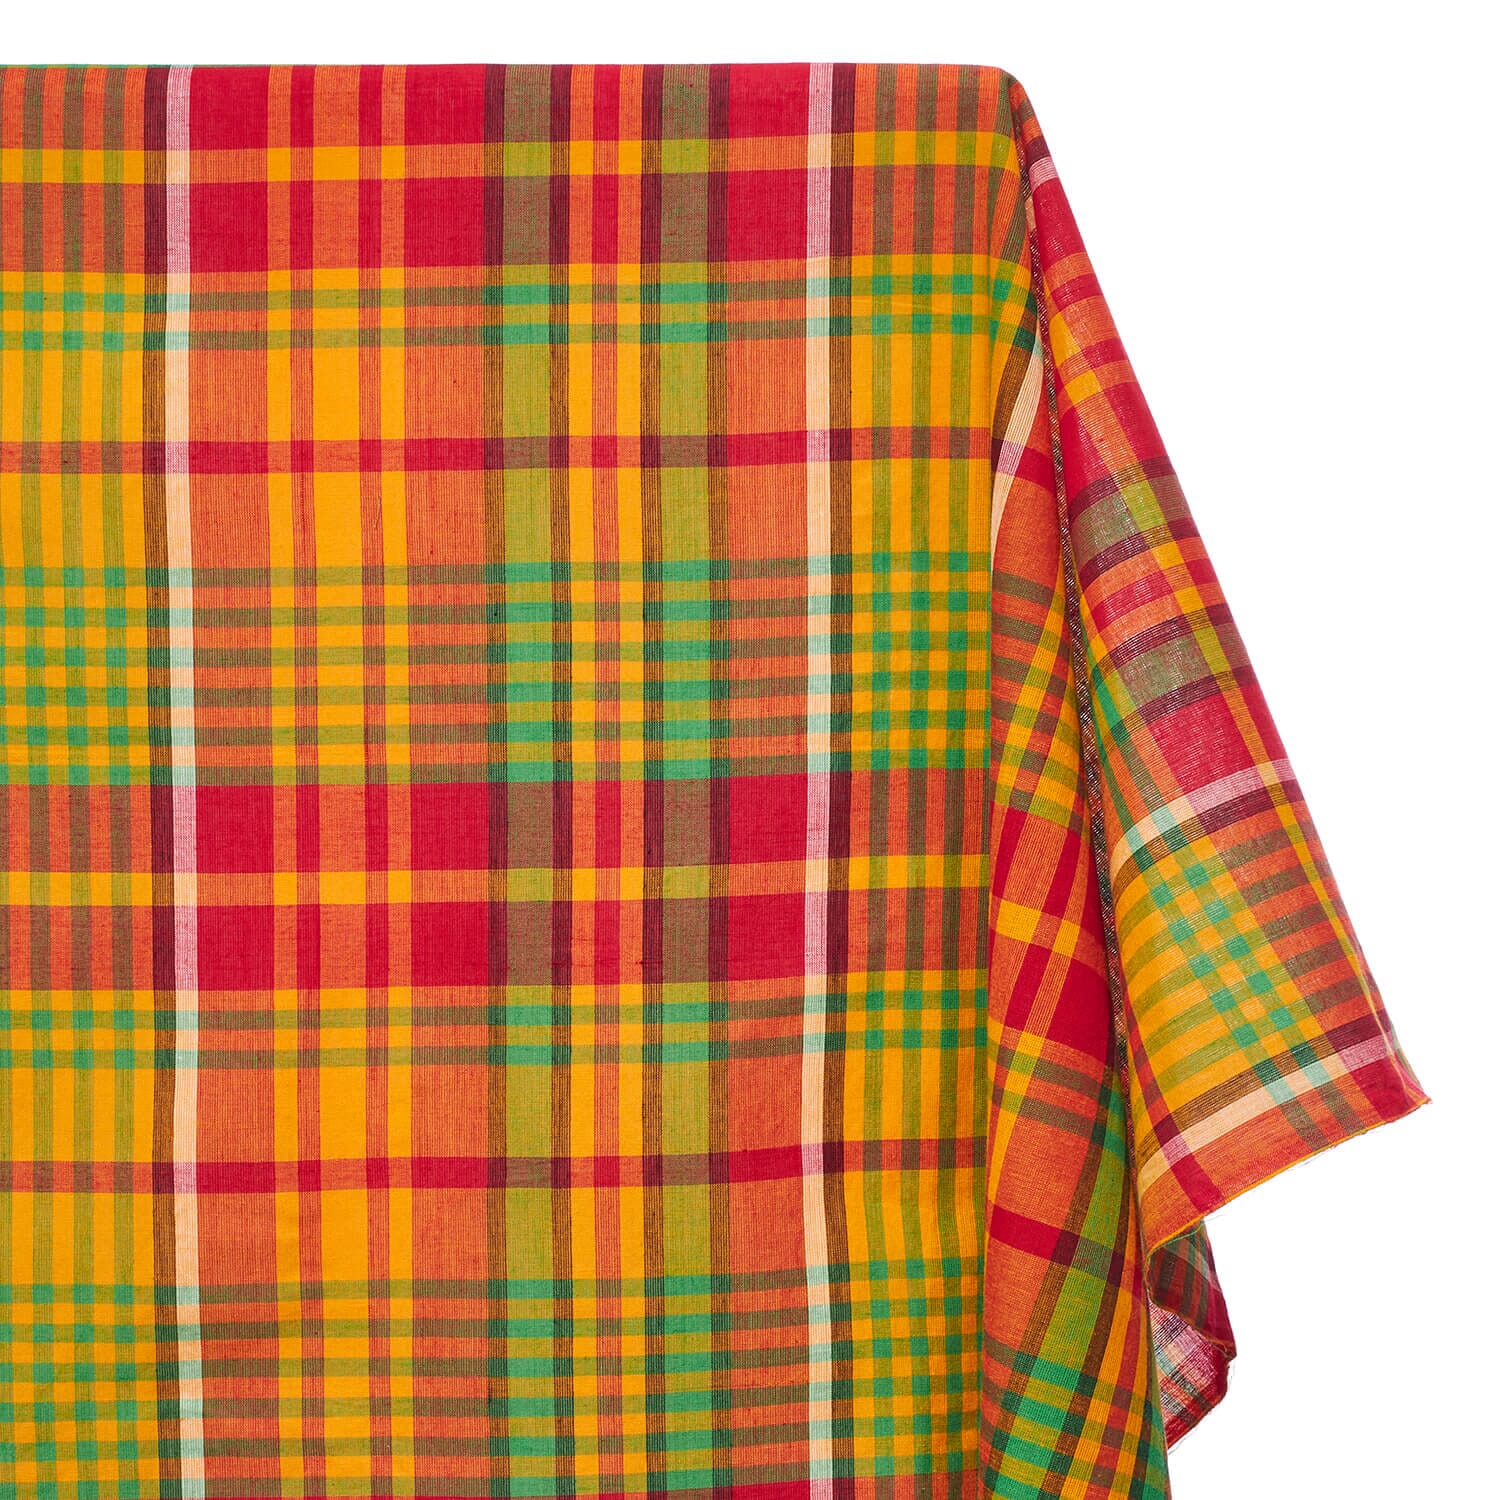 Madras Plaid Fabric (Style 322) 100% Cotton 44/45 Wide $4.99/Yard